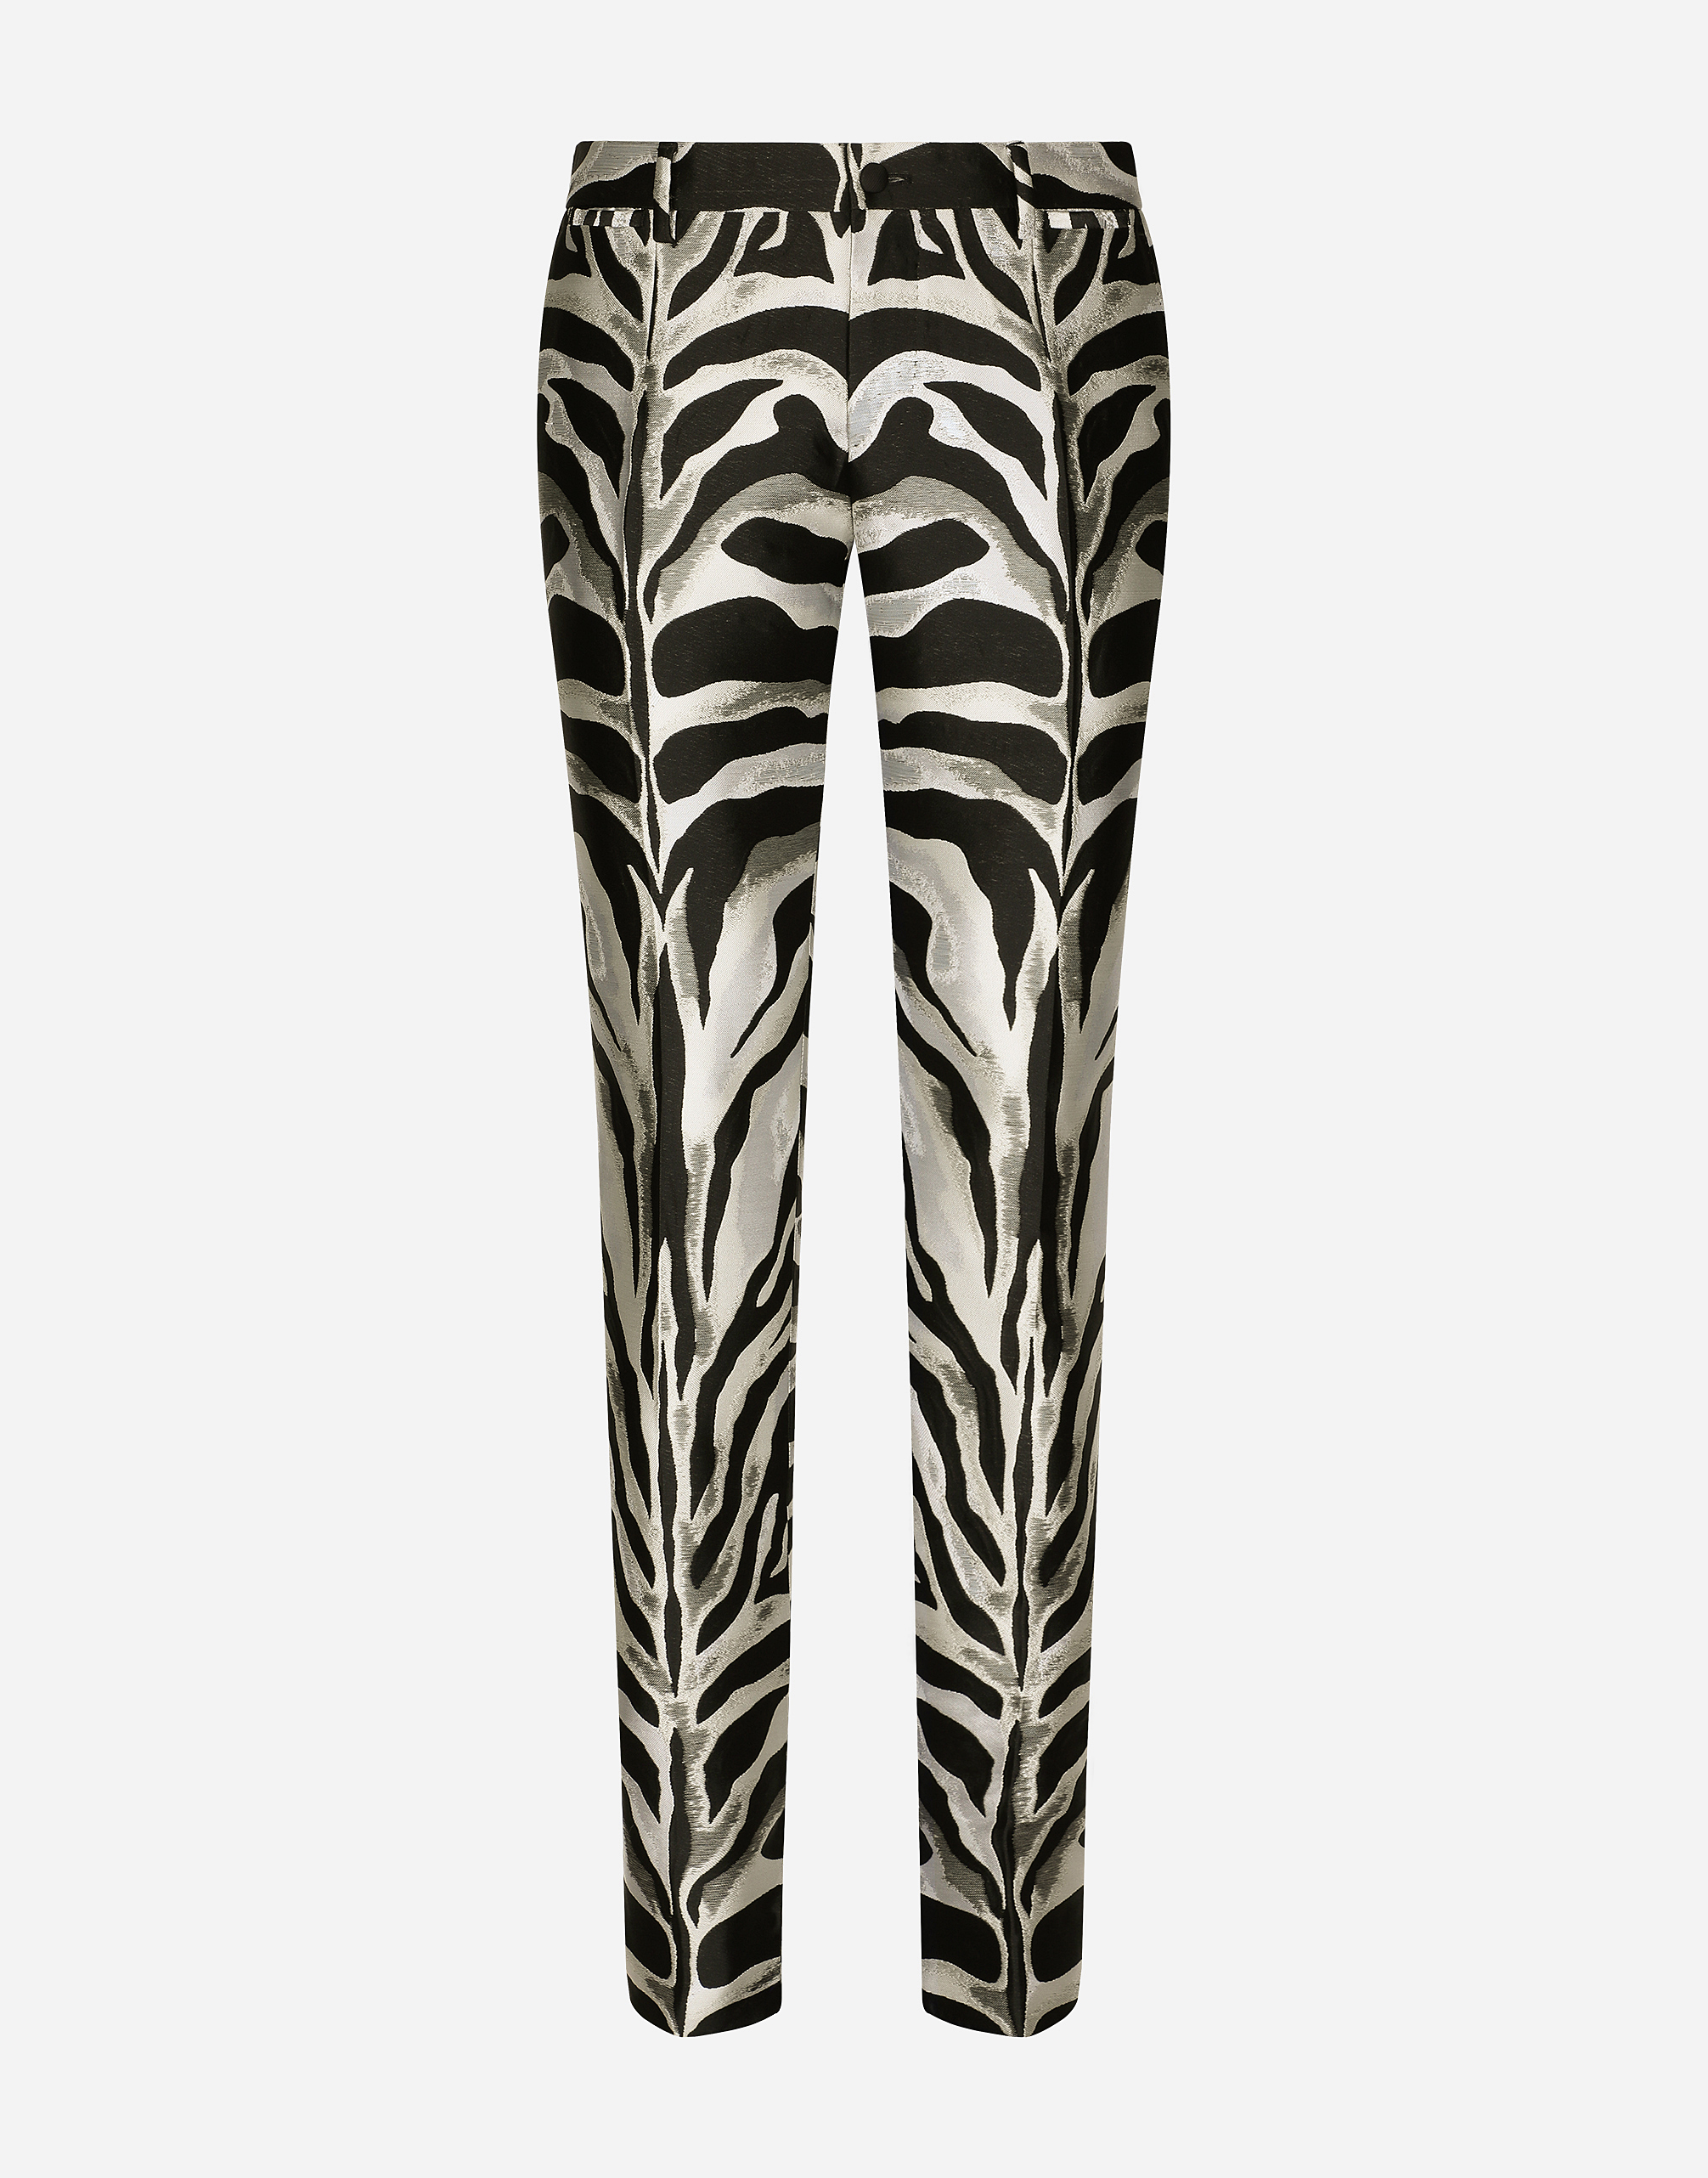 Lamé jacquard pants with zebra design in Multicolor